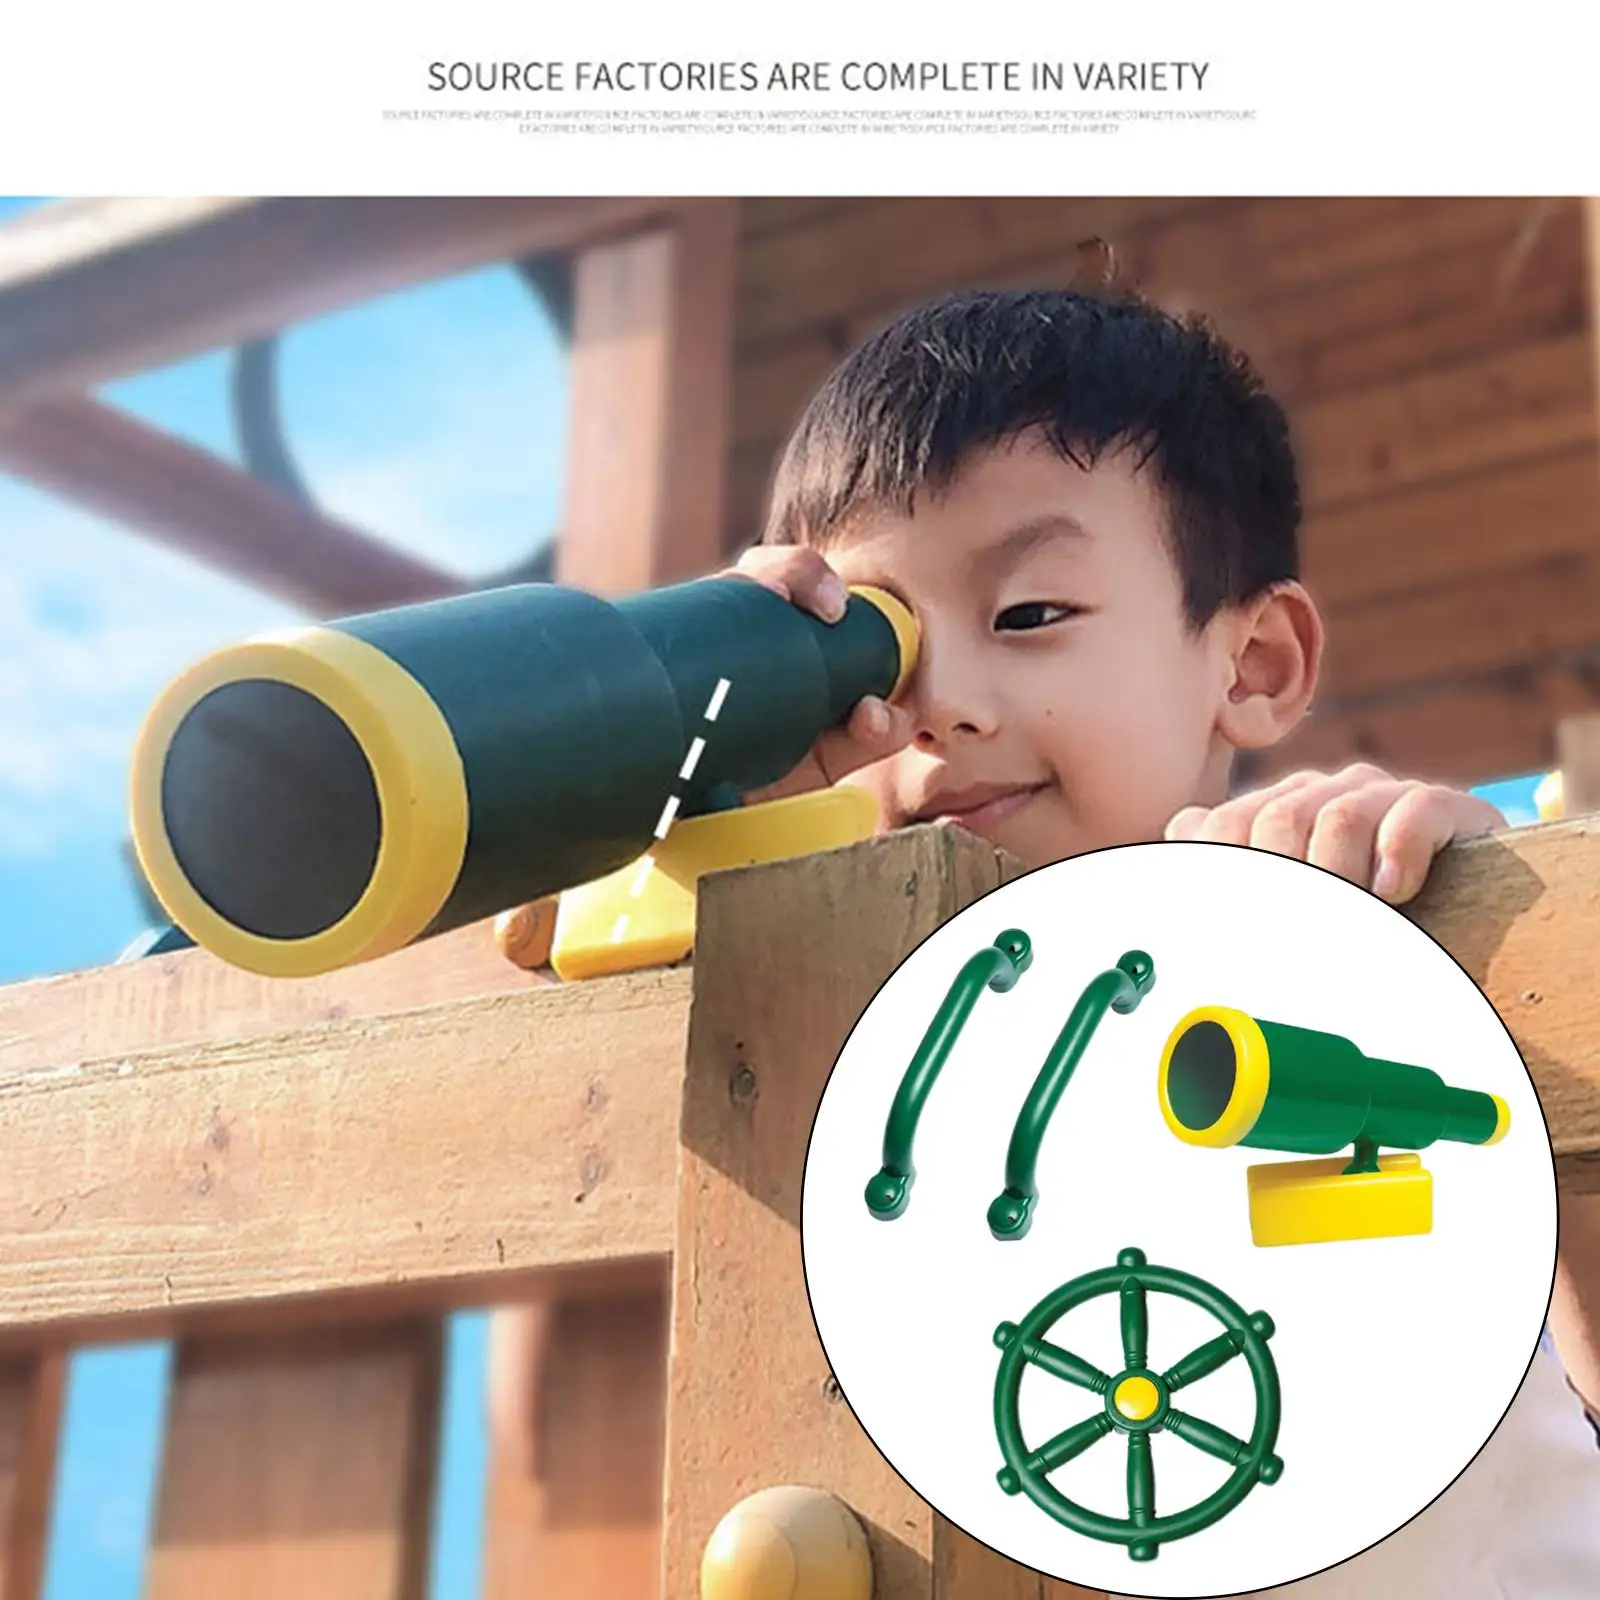 4Pcs Plastic Kids Pirate Telescope Steering Wheel & Safety Handle Bars Playground Equipment Set for Backyard Gym Boys & Girls